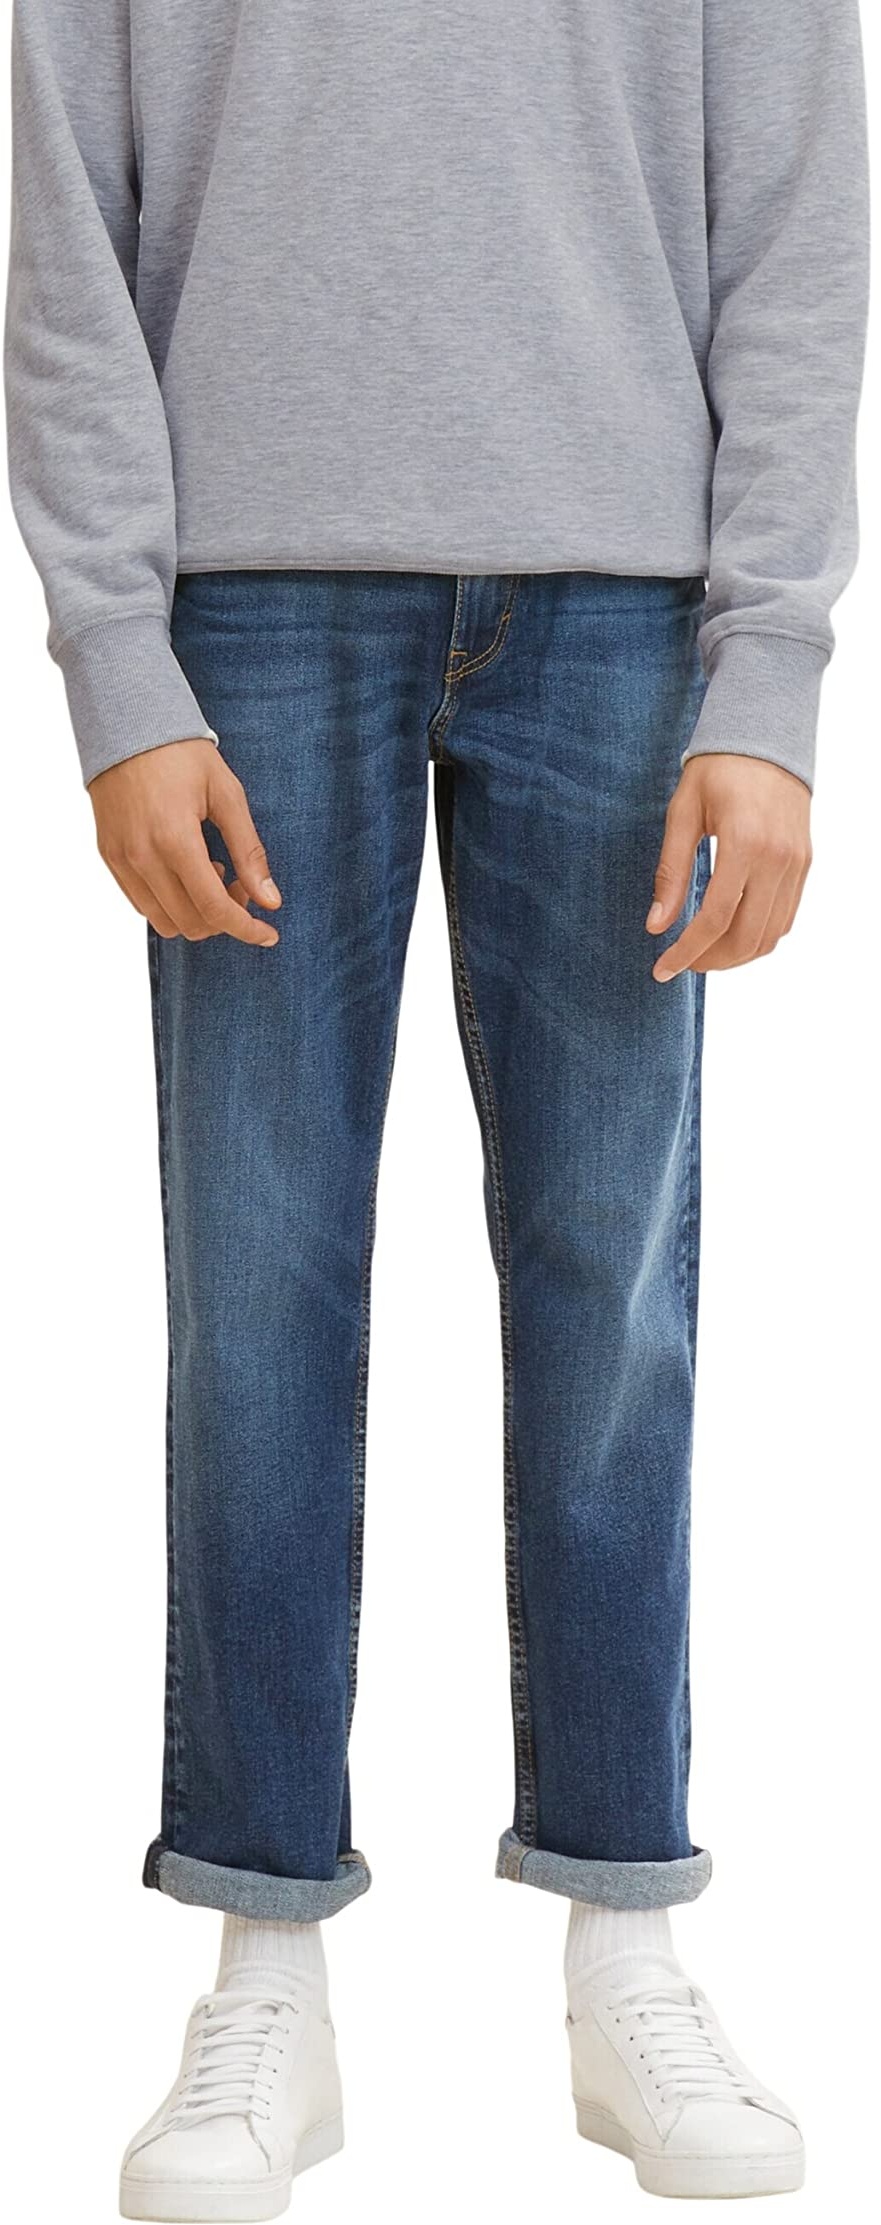 TOM TAILOR Herren Marvin Straight Jeans, 10119 - Used Mid Stone Blue Denim, 36W / 34L